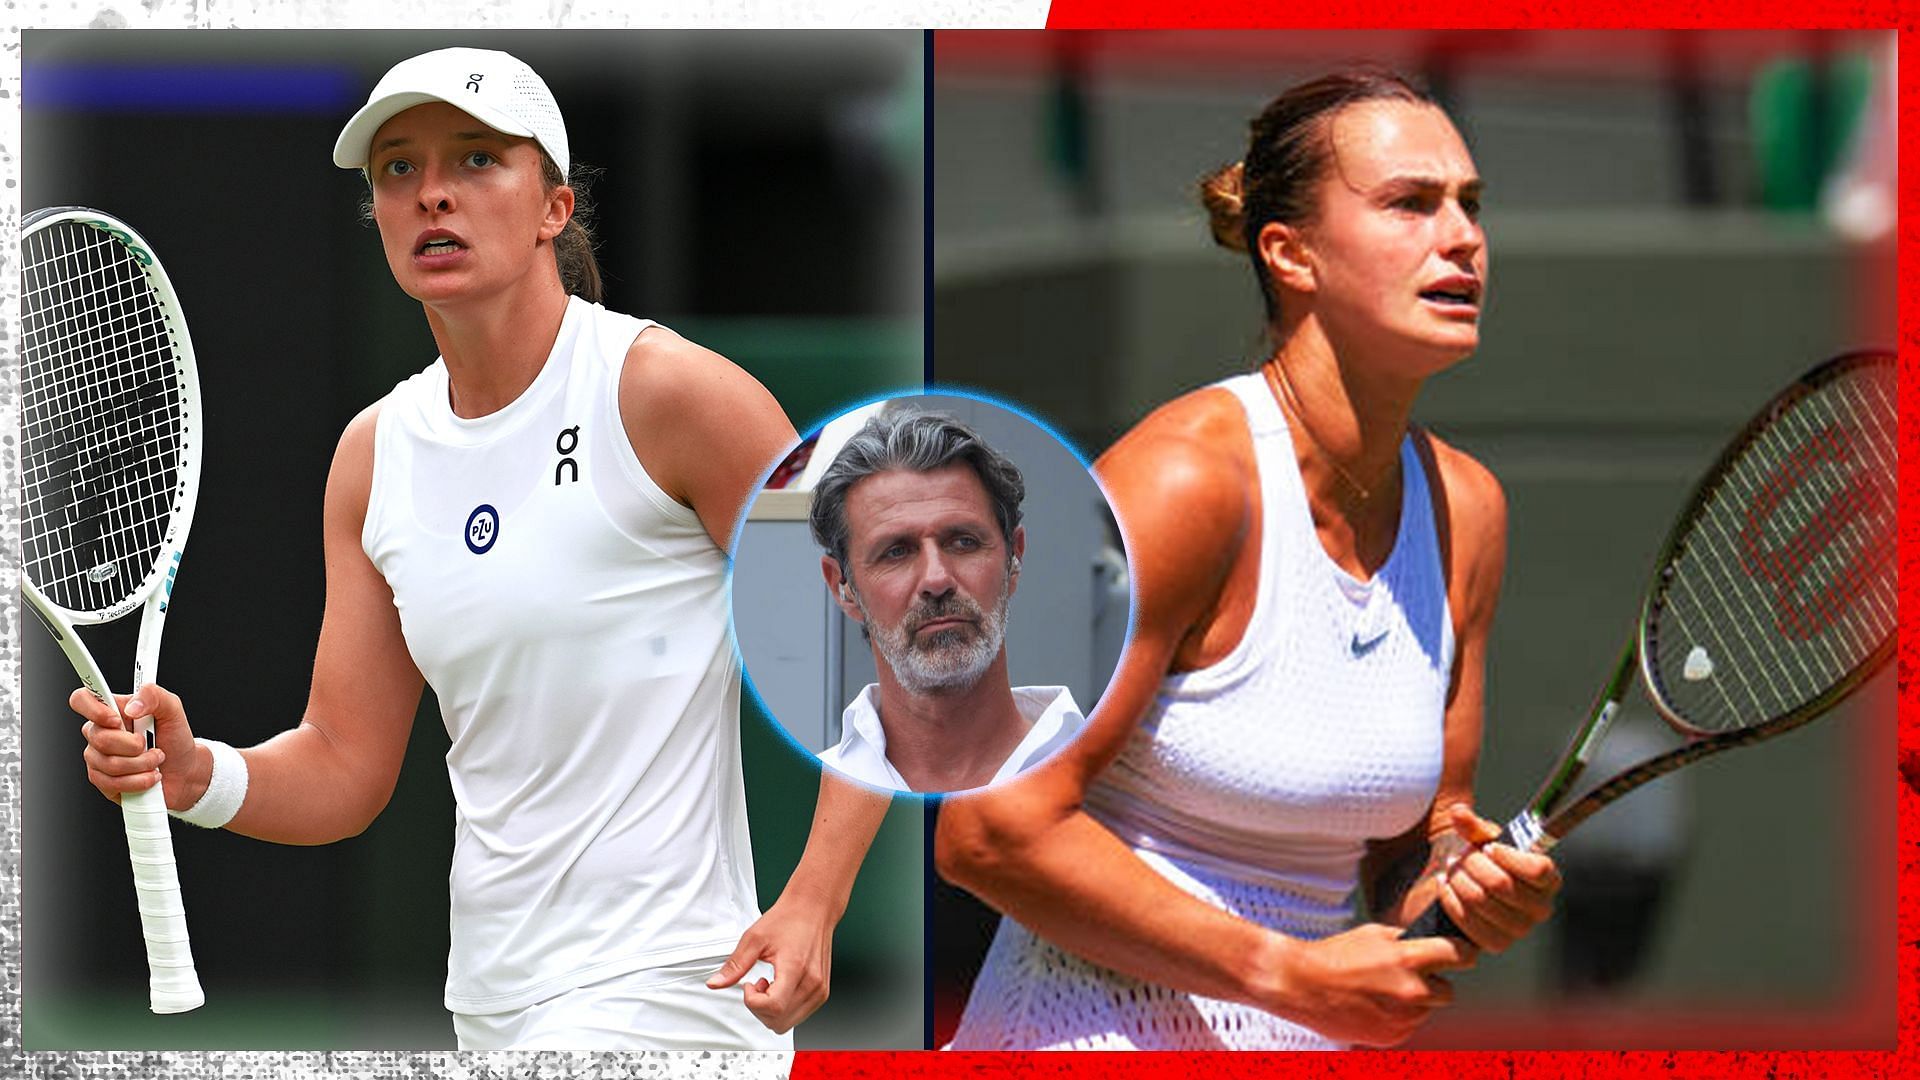 Iga Swiatek and Aryna Sabalenka were unable to play well at Wimbledon, says Patrick Mouratoglou